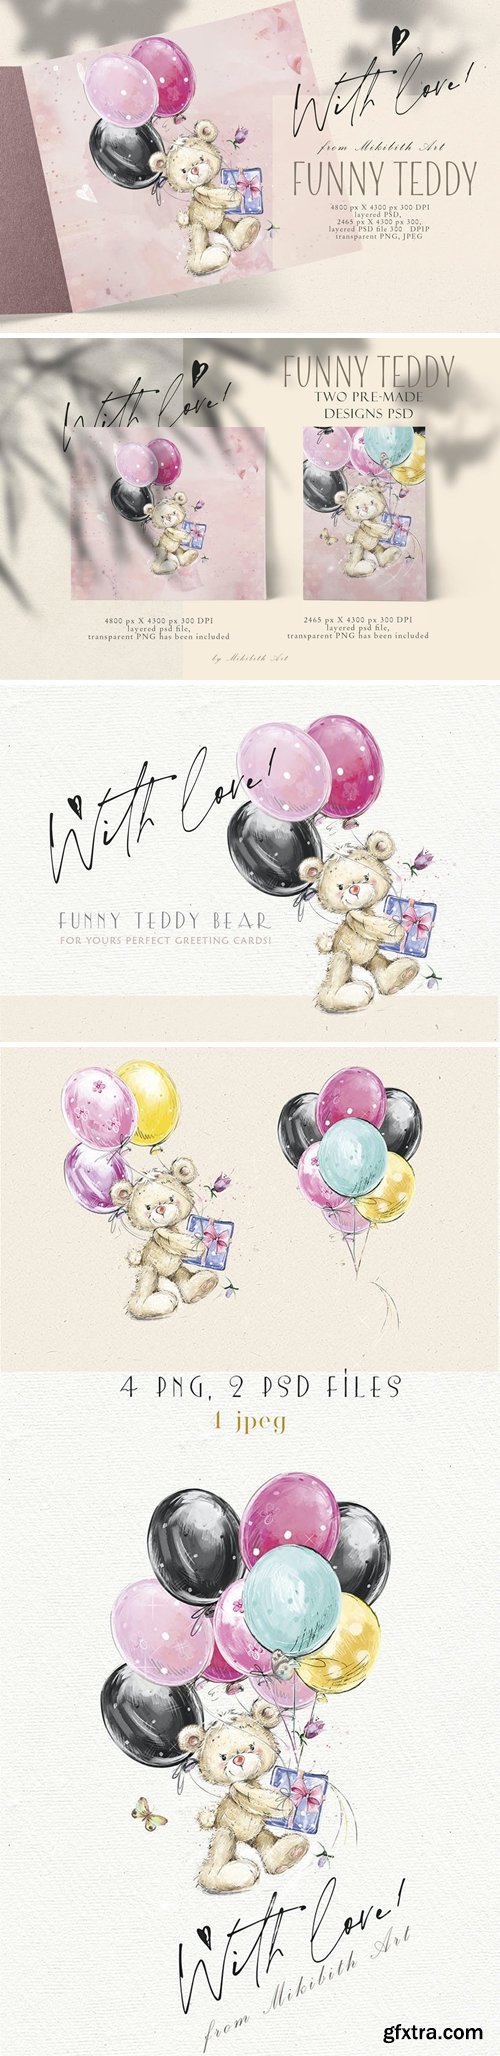 Teddy bear illustration & ready-made design